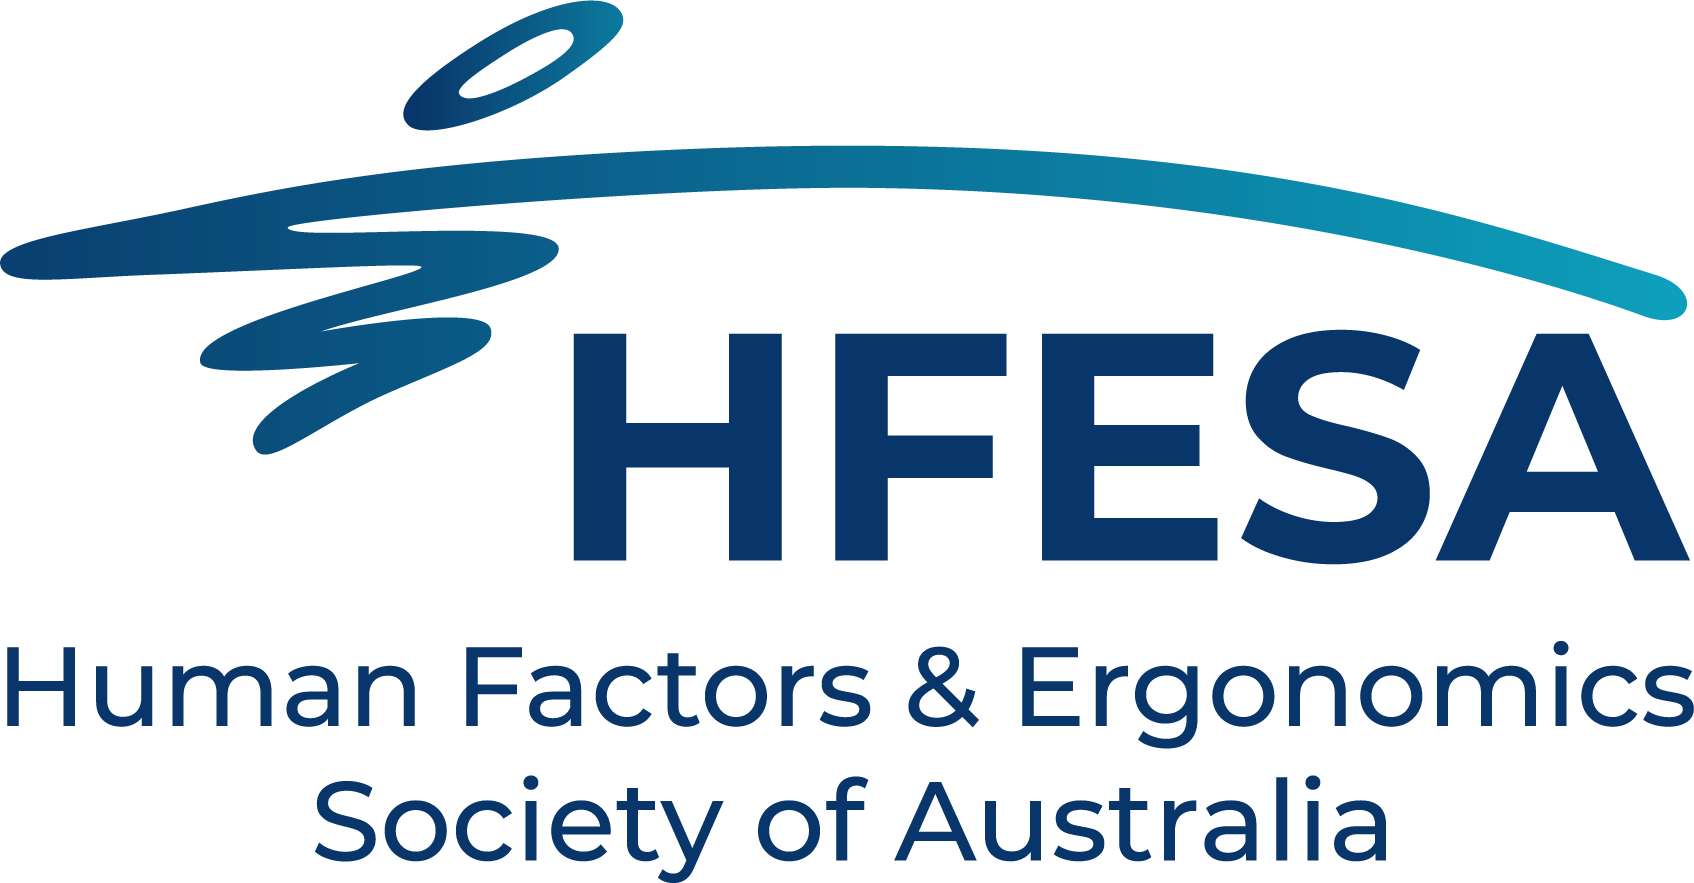 Human Factors and Ergonomics Society of Australia